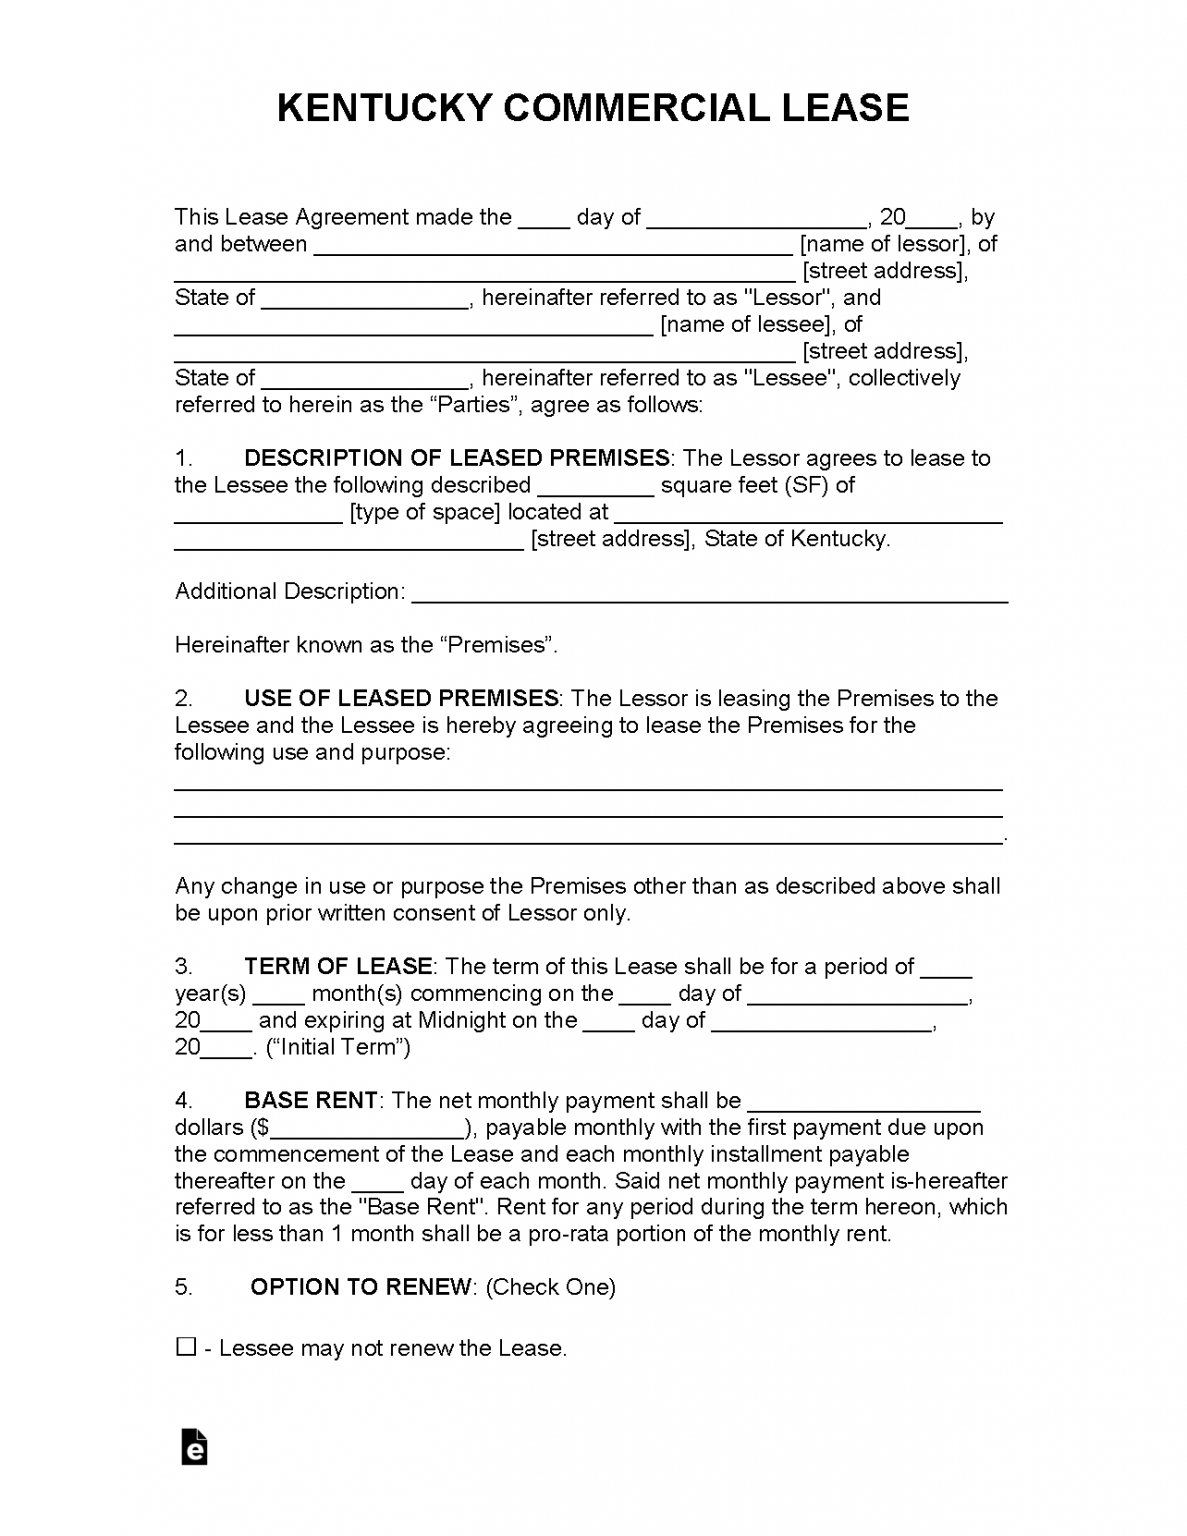 free-kentucky-lease-agreement-templates-6-pdf-word-rtf